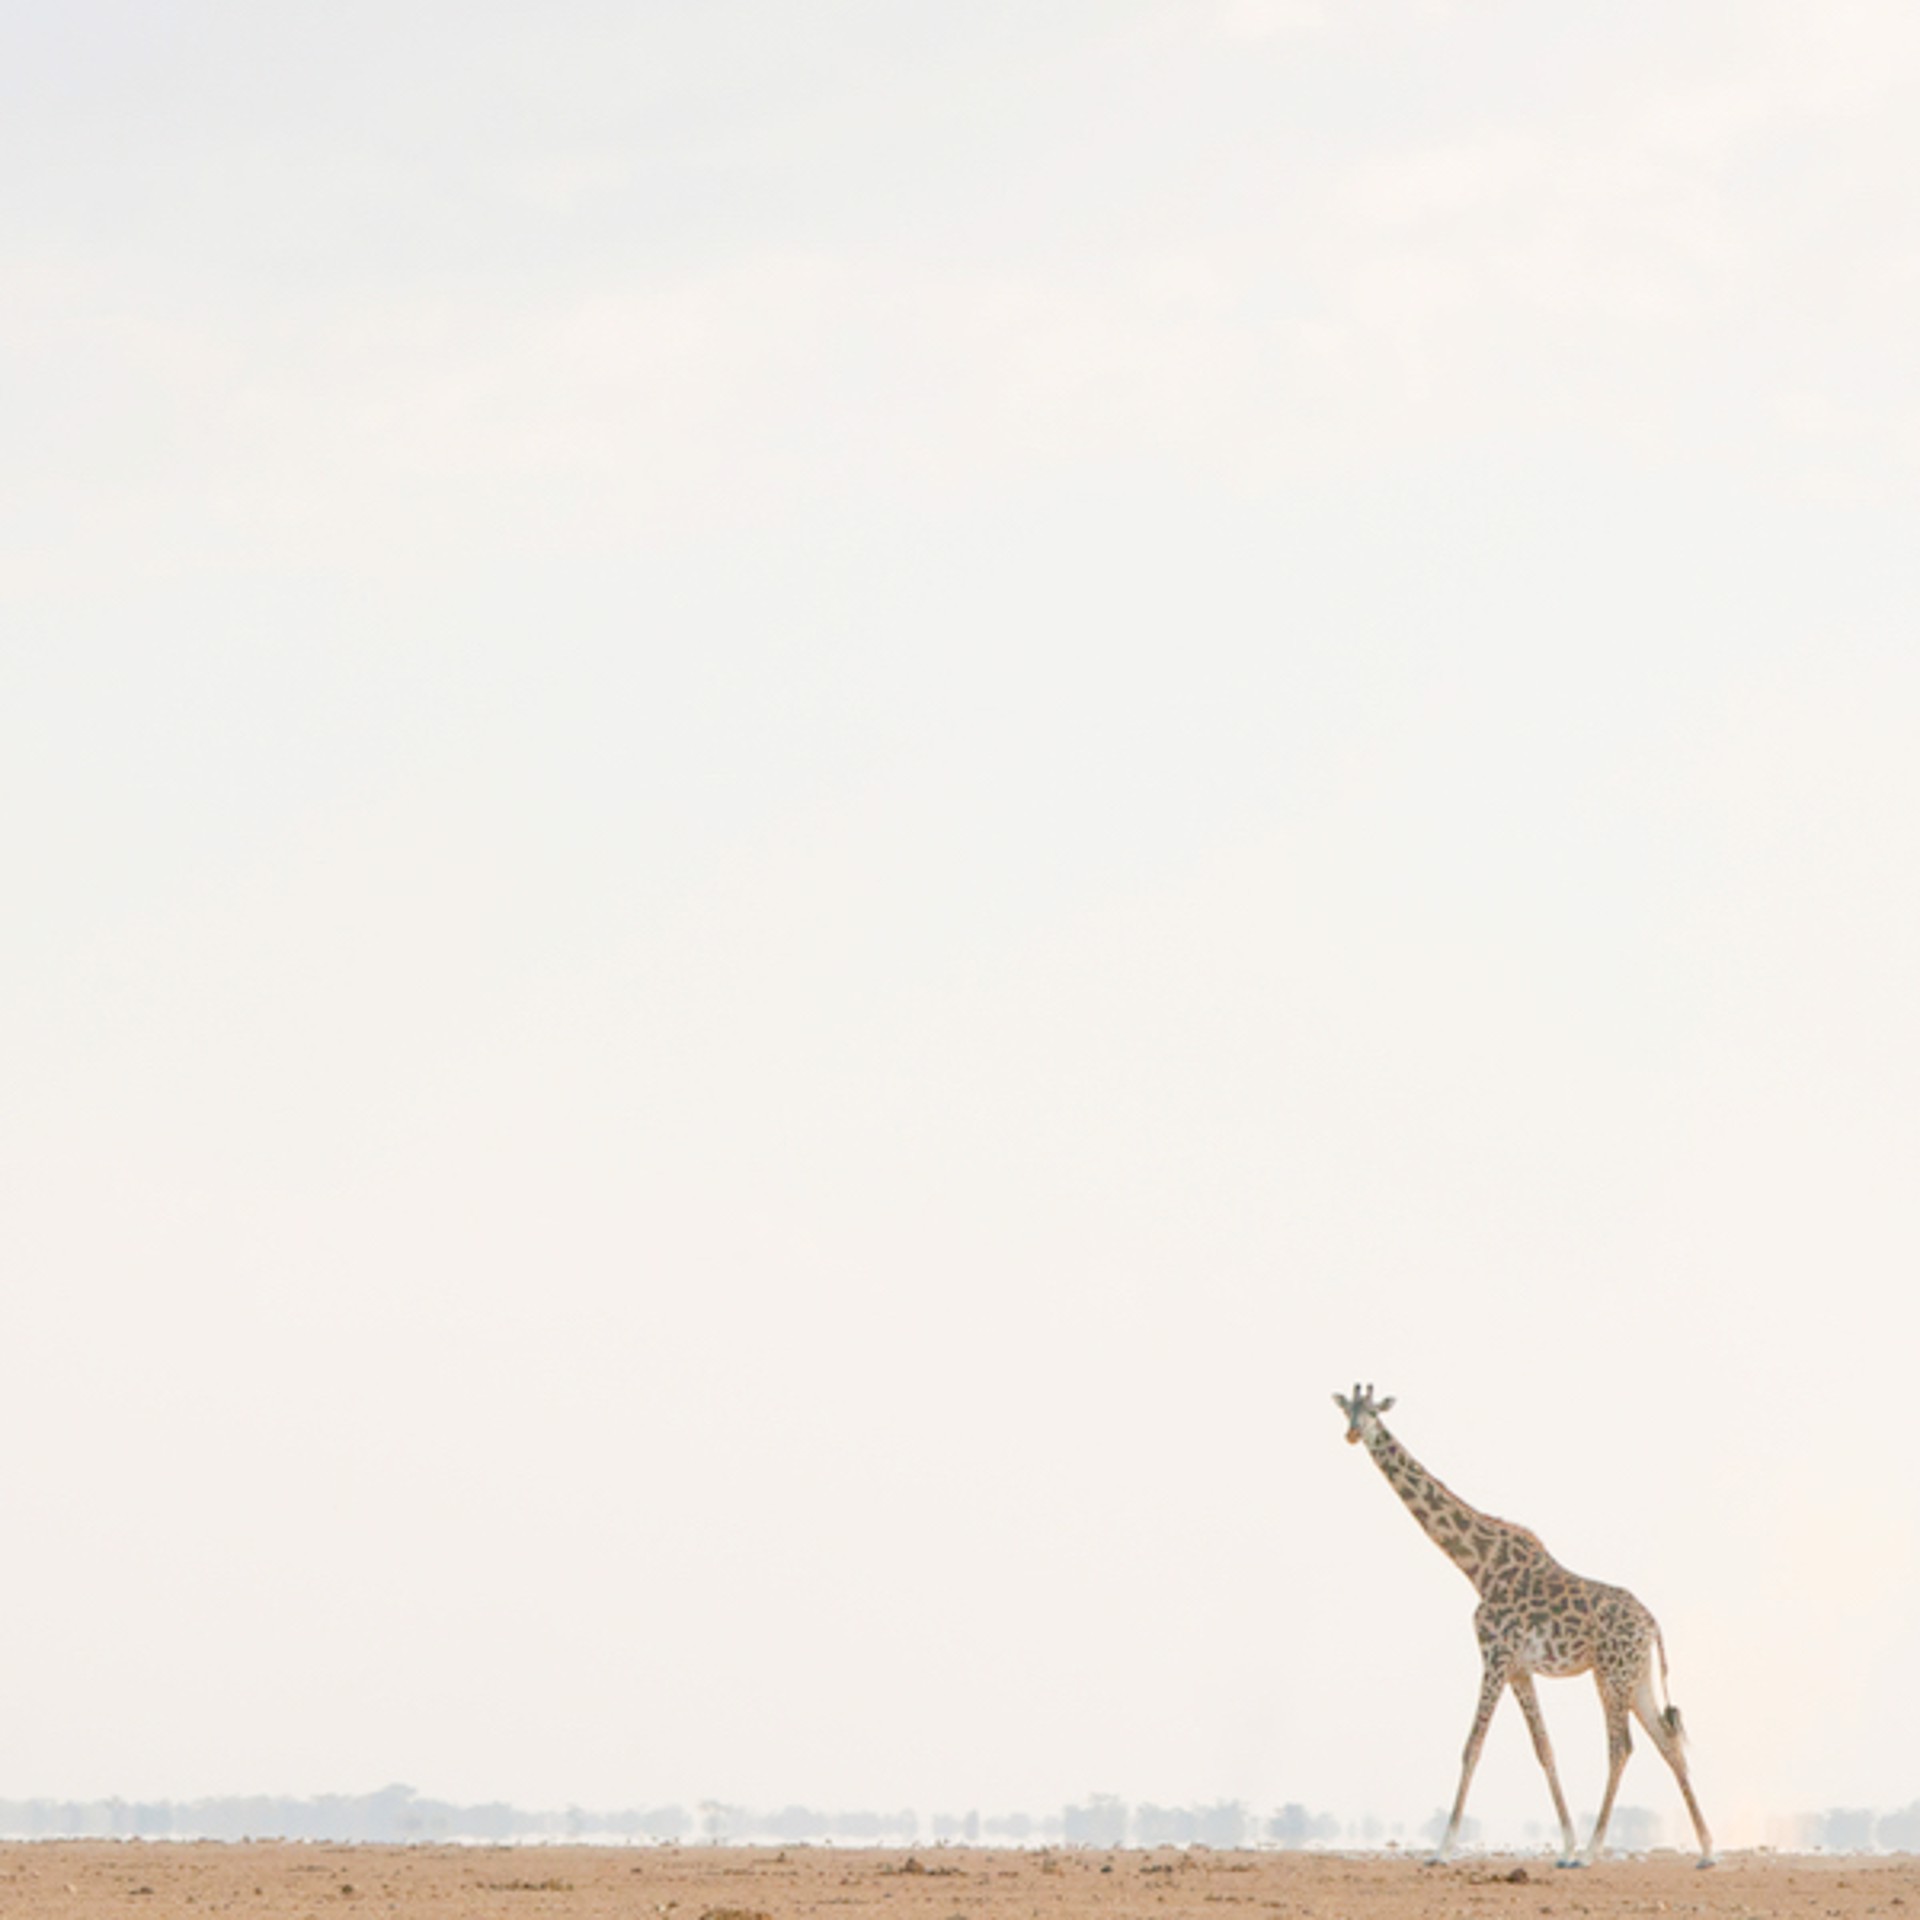 Giraffe Walking Across the Evening Plains by Tess Atkinson